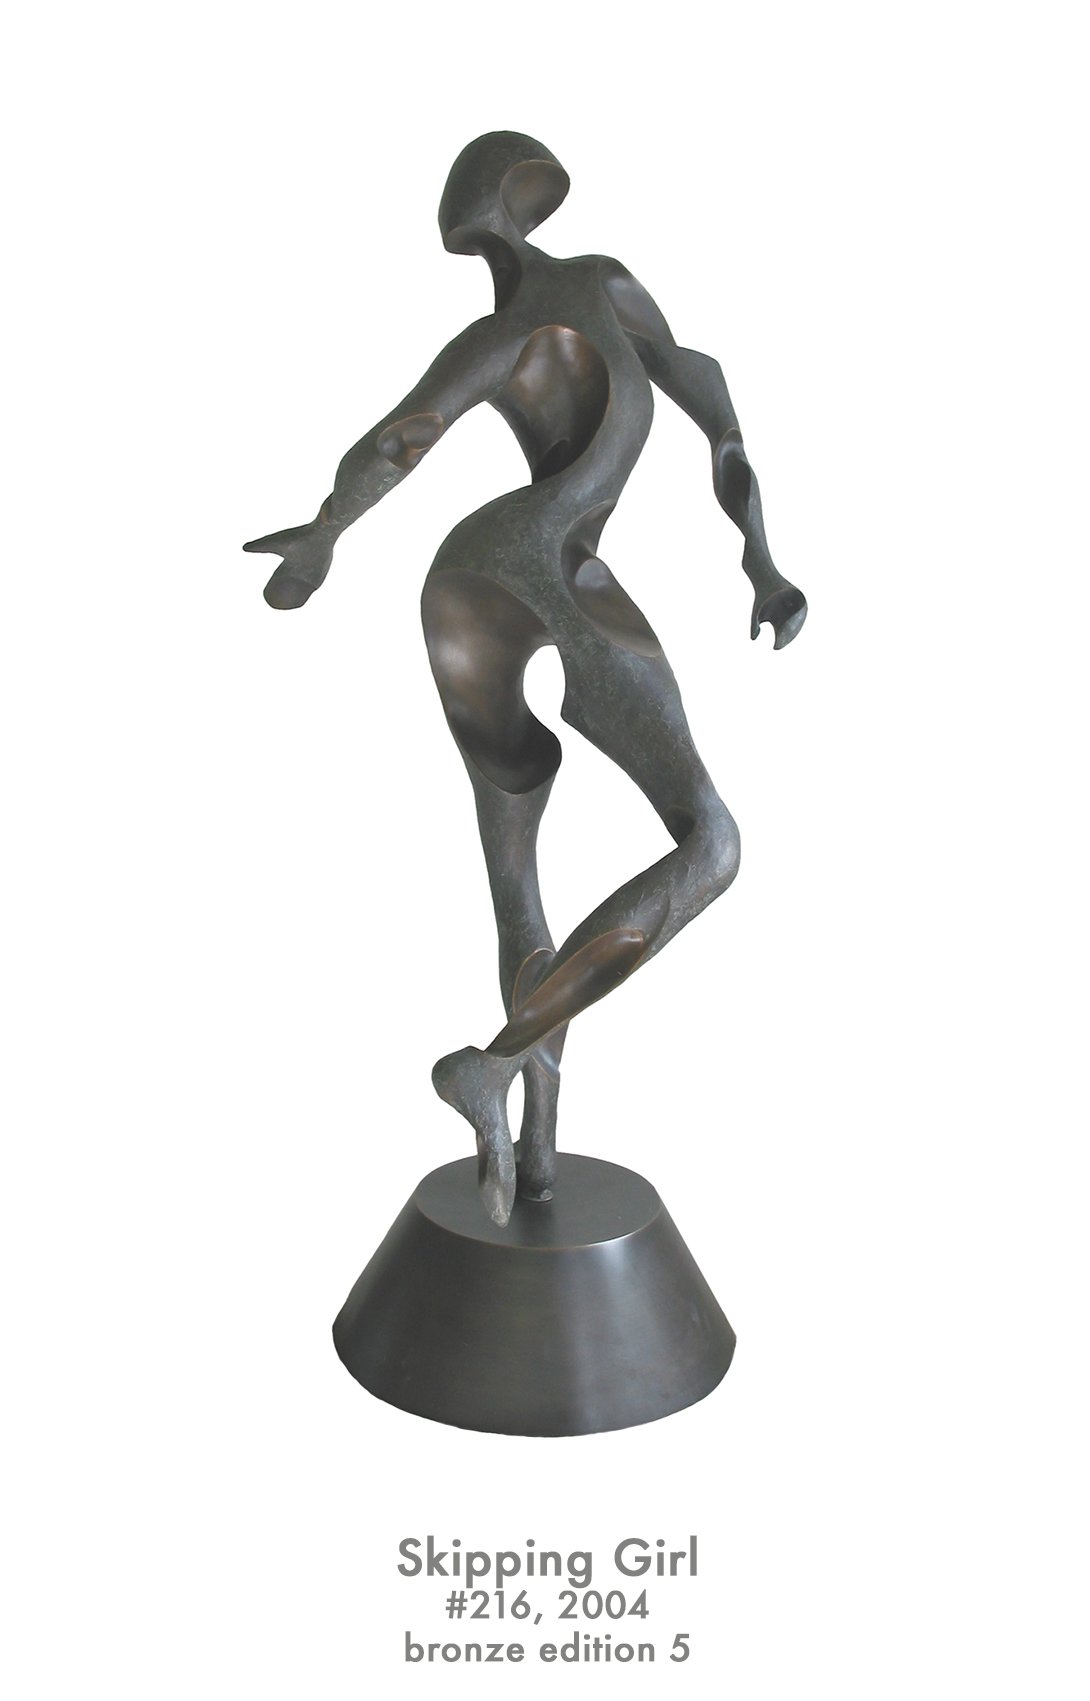 Skipping Girl, 2004, bronze, #216